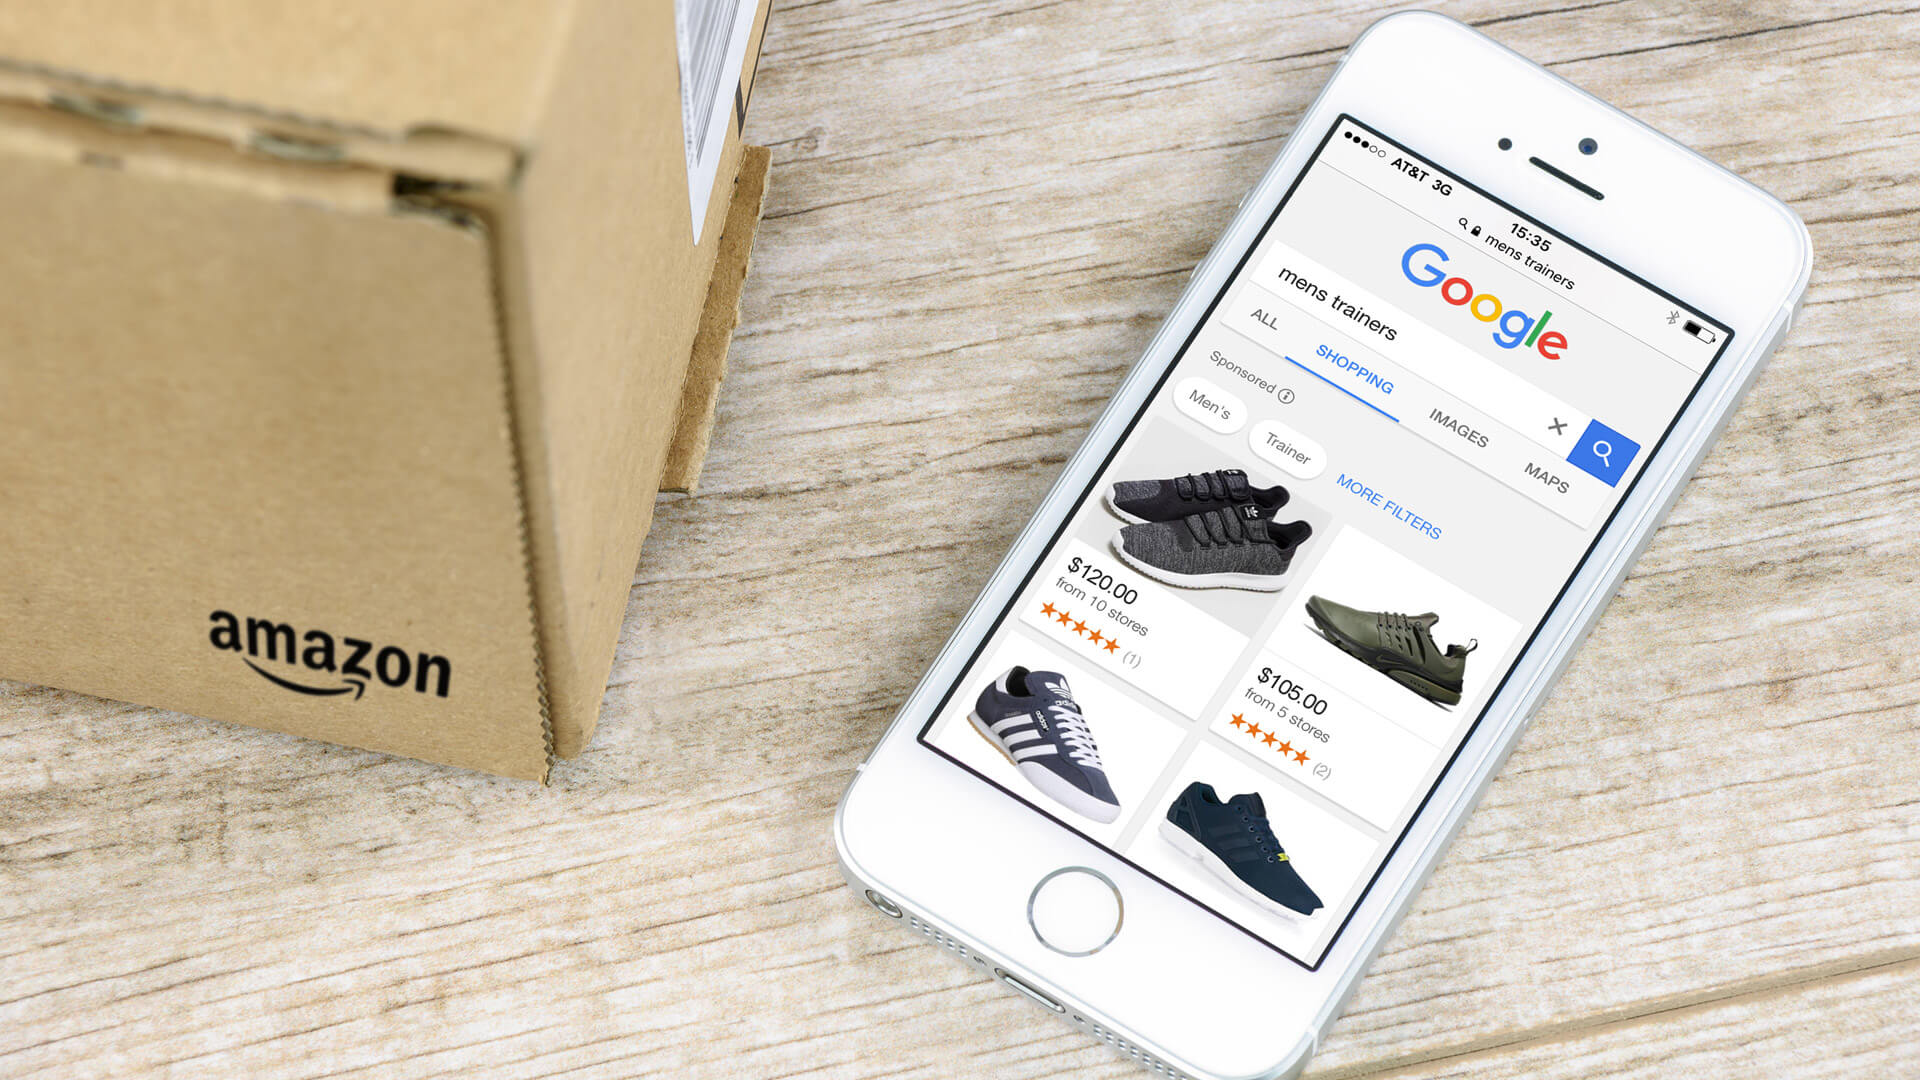 Amazon Box And Google Shopping Phone